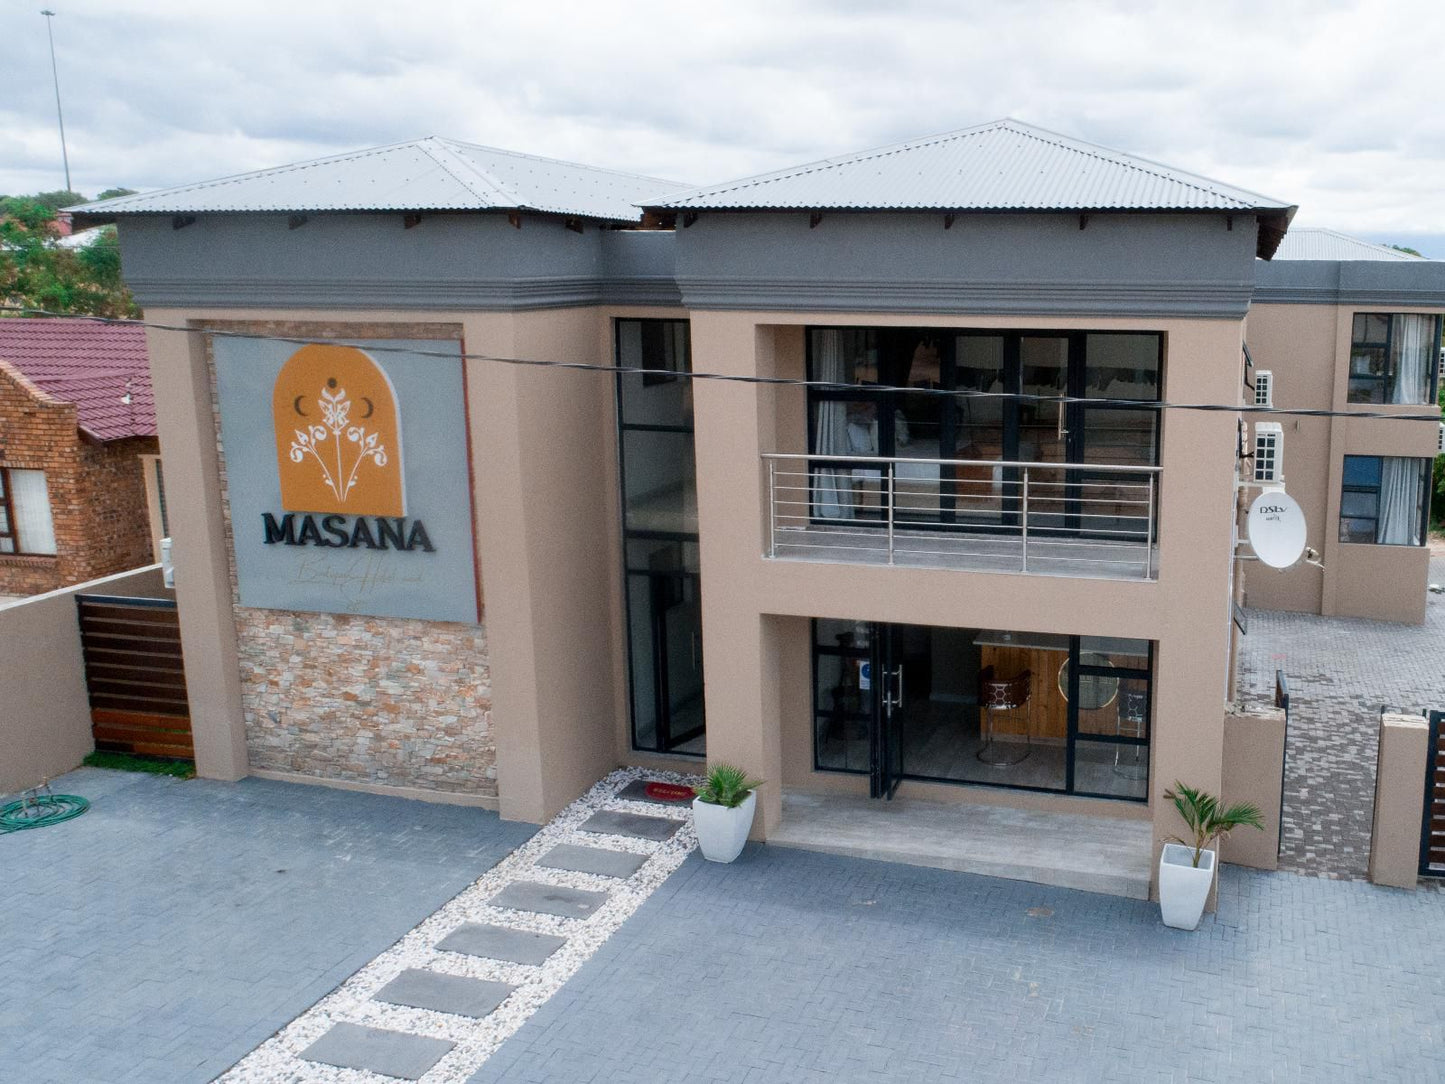 Masana Boutique Hotel And Spa Thulamahashe Mpumalanga South Africa Building, Architecture, Window